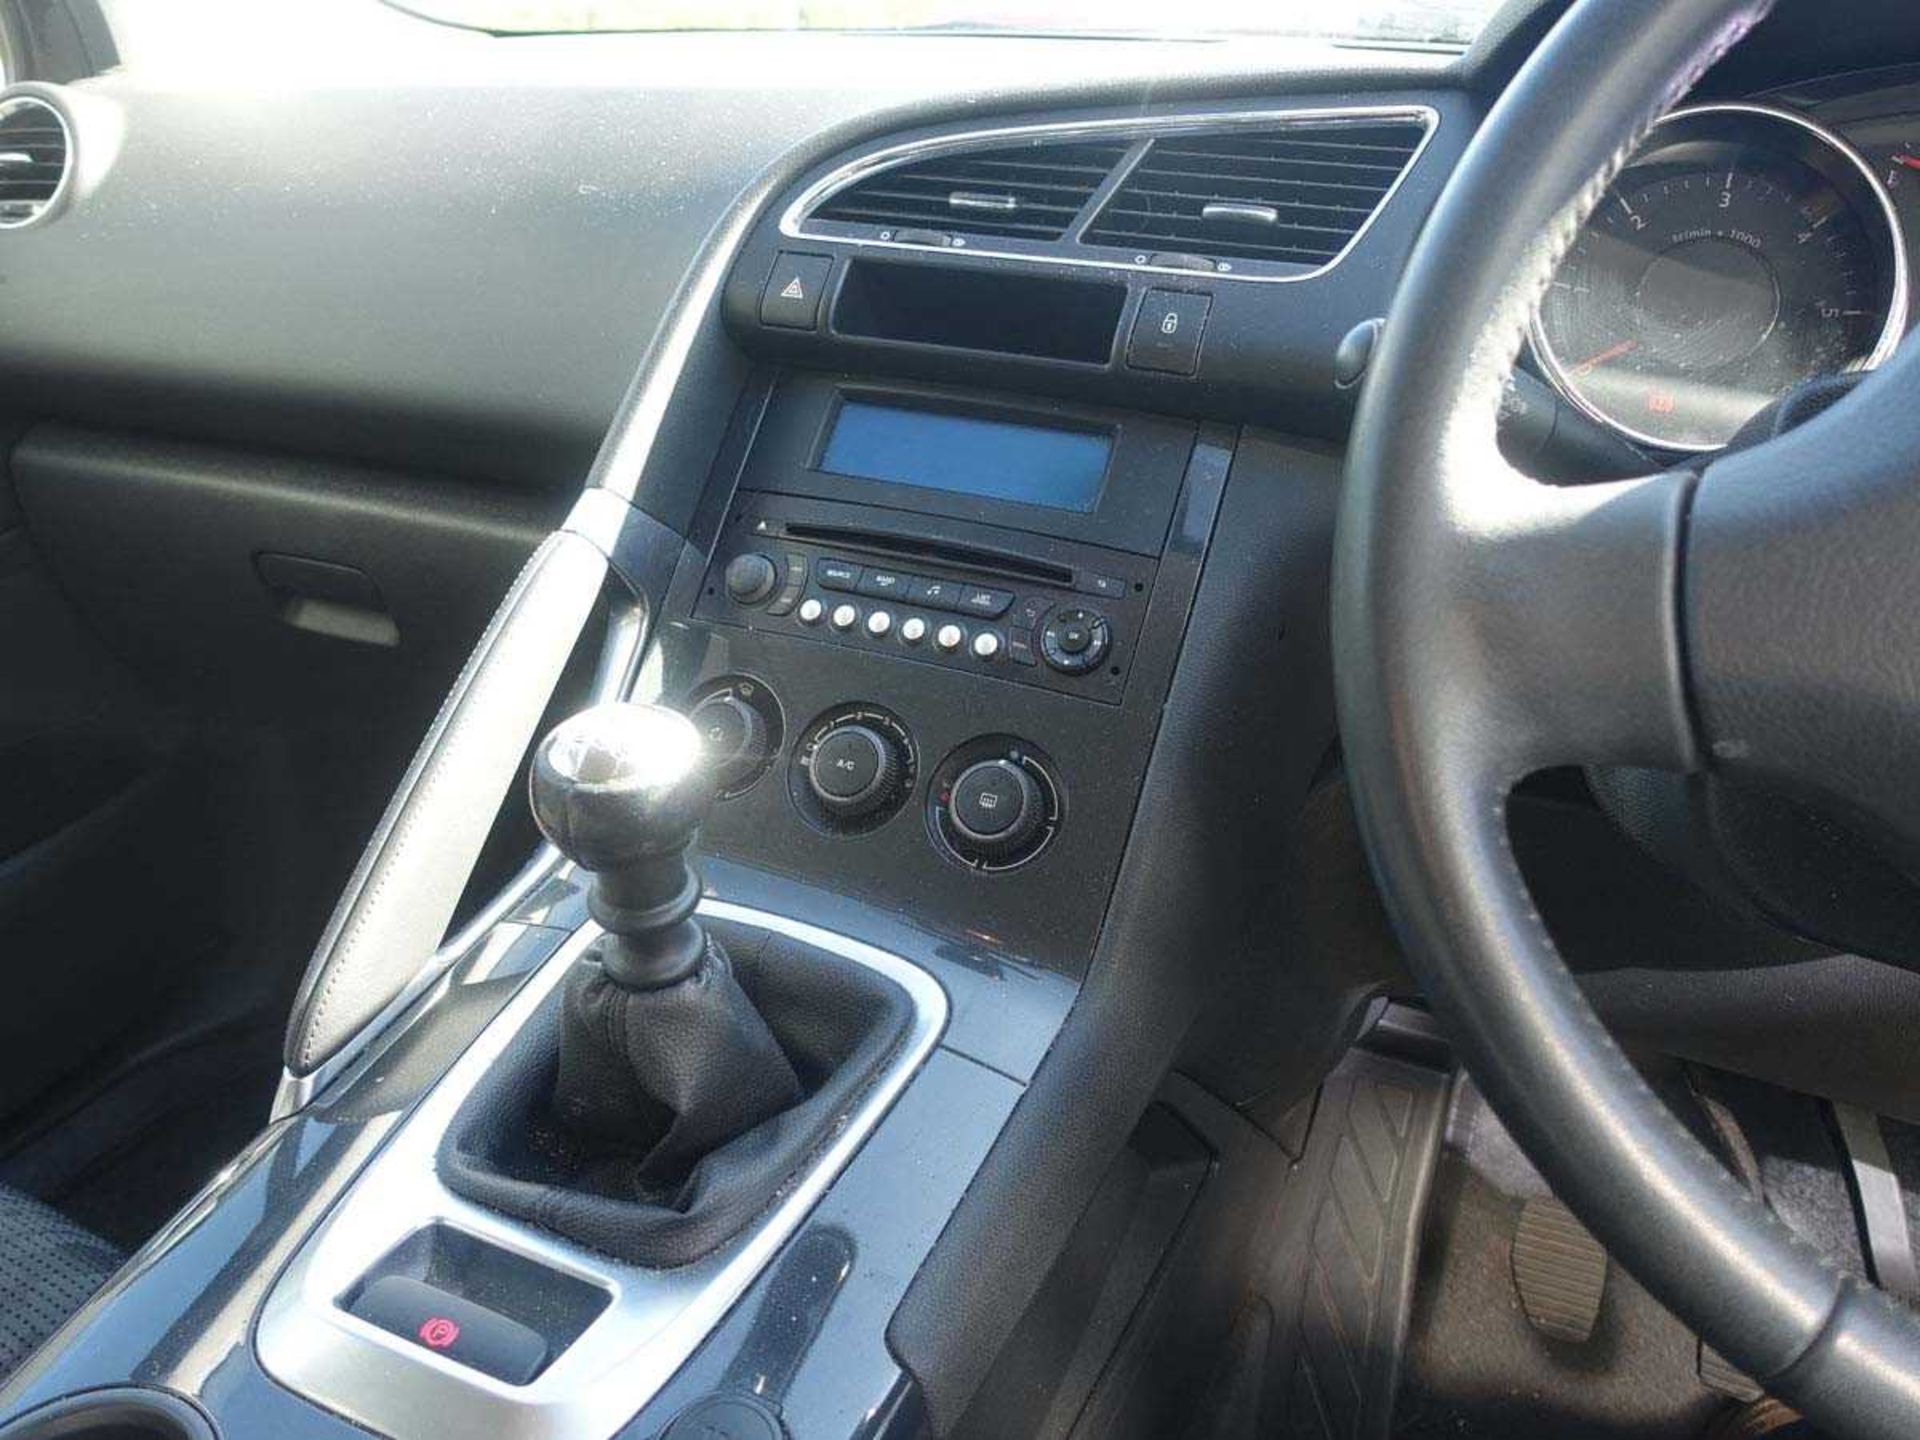 (OFZ 2331) 2013 Peugeot 3008 Active HDI 5-door hatchback in black, 6-speed manual, 1560cc diesel, - Image 9 of 11